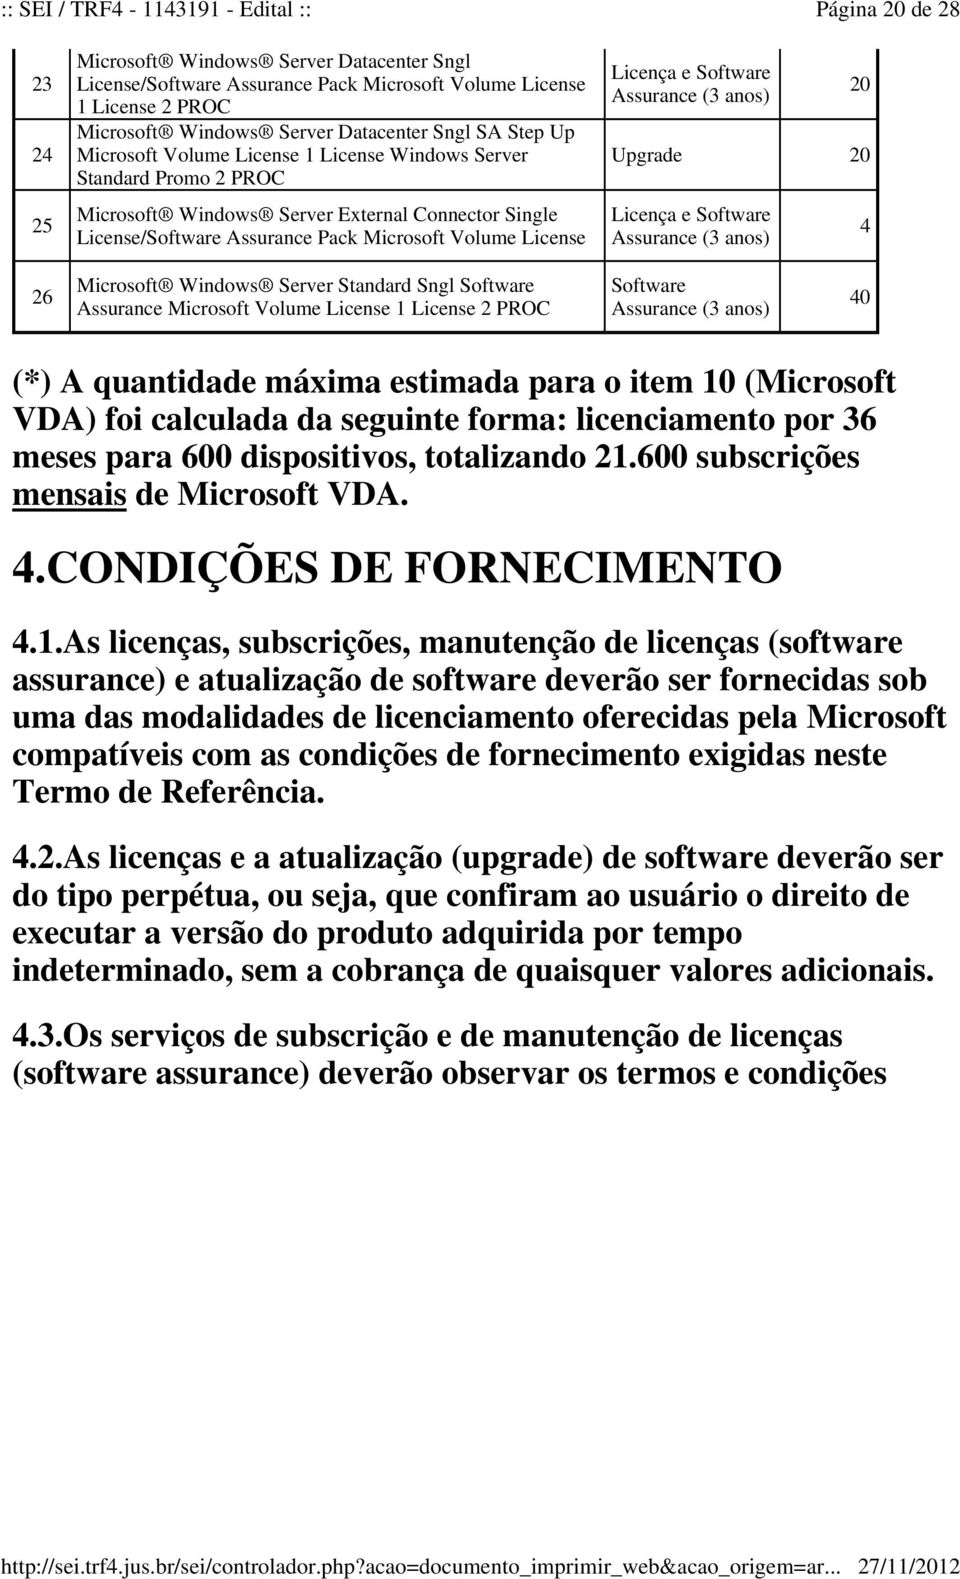 Microsoft Volume License 1 License 2 PROC 40 (*) A quantidade máxima estimada para o item 10 (Microsoft VDA) foi calculada da seguinte forma: licenciamento por 36 meses para 600 dispositivos,